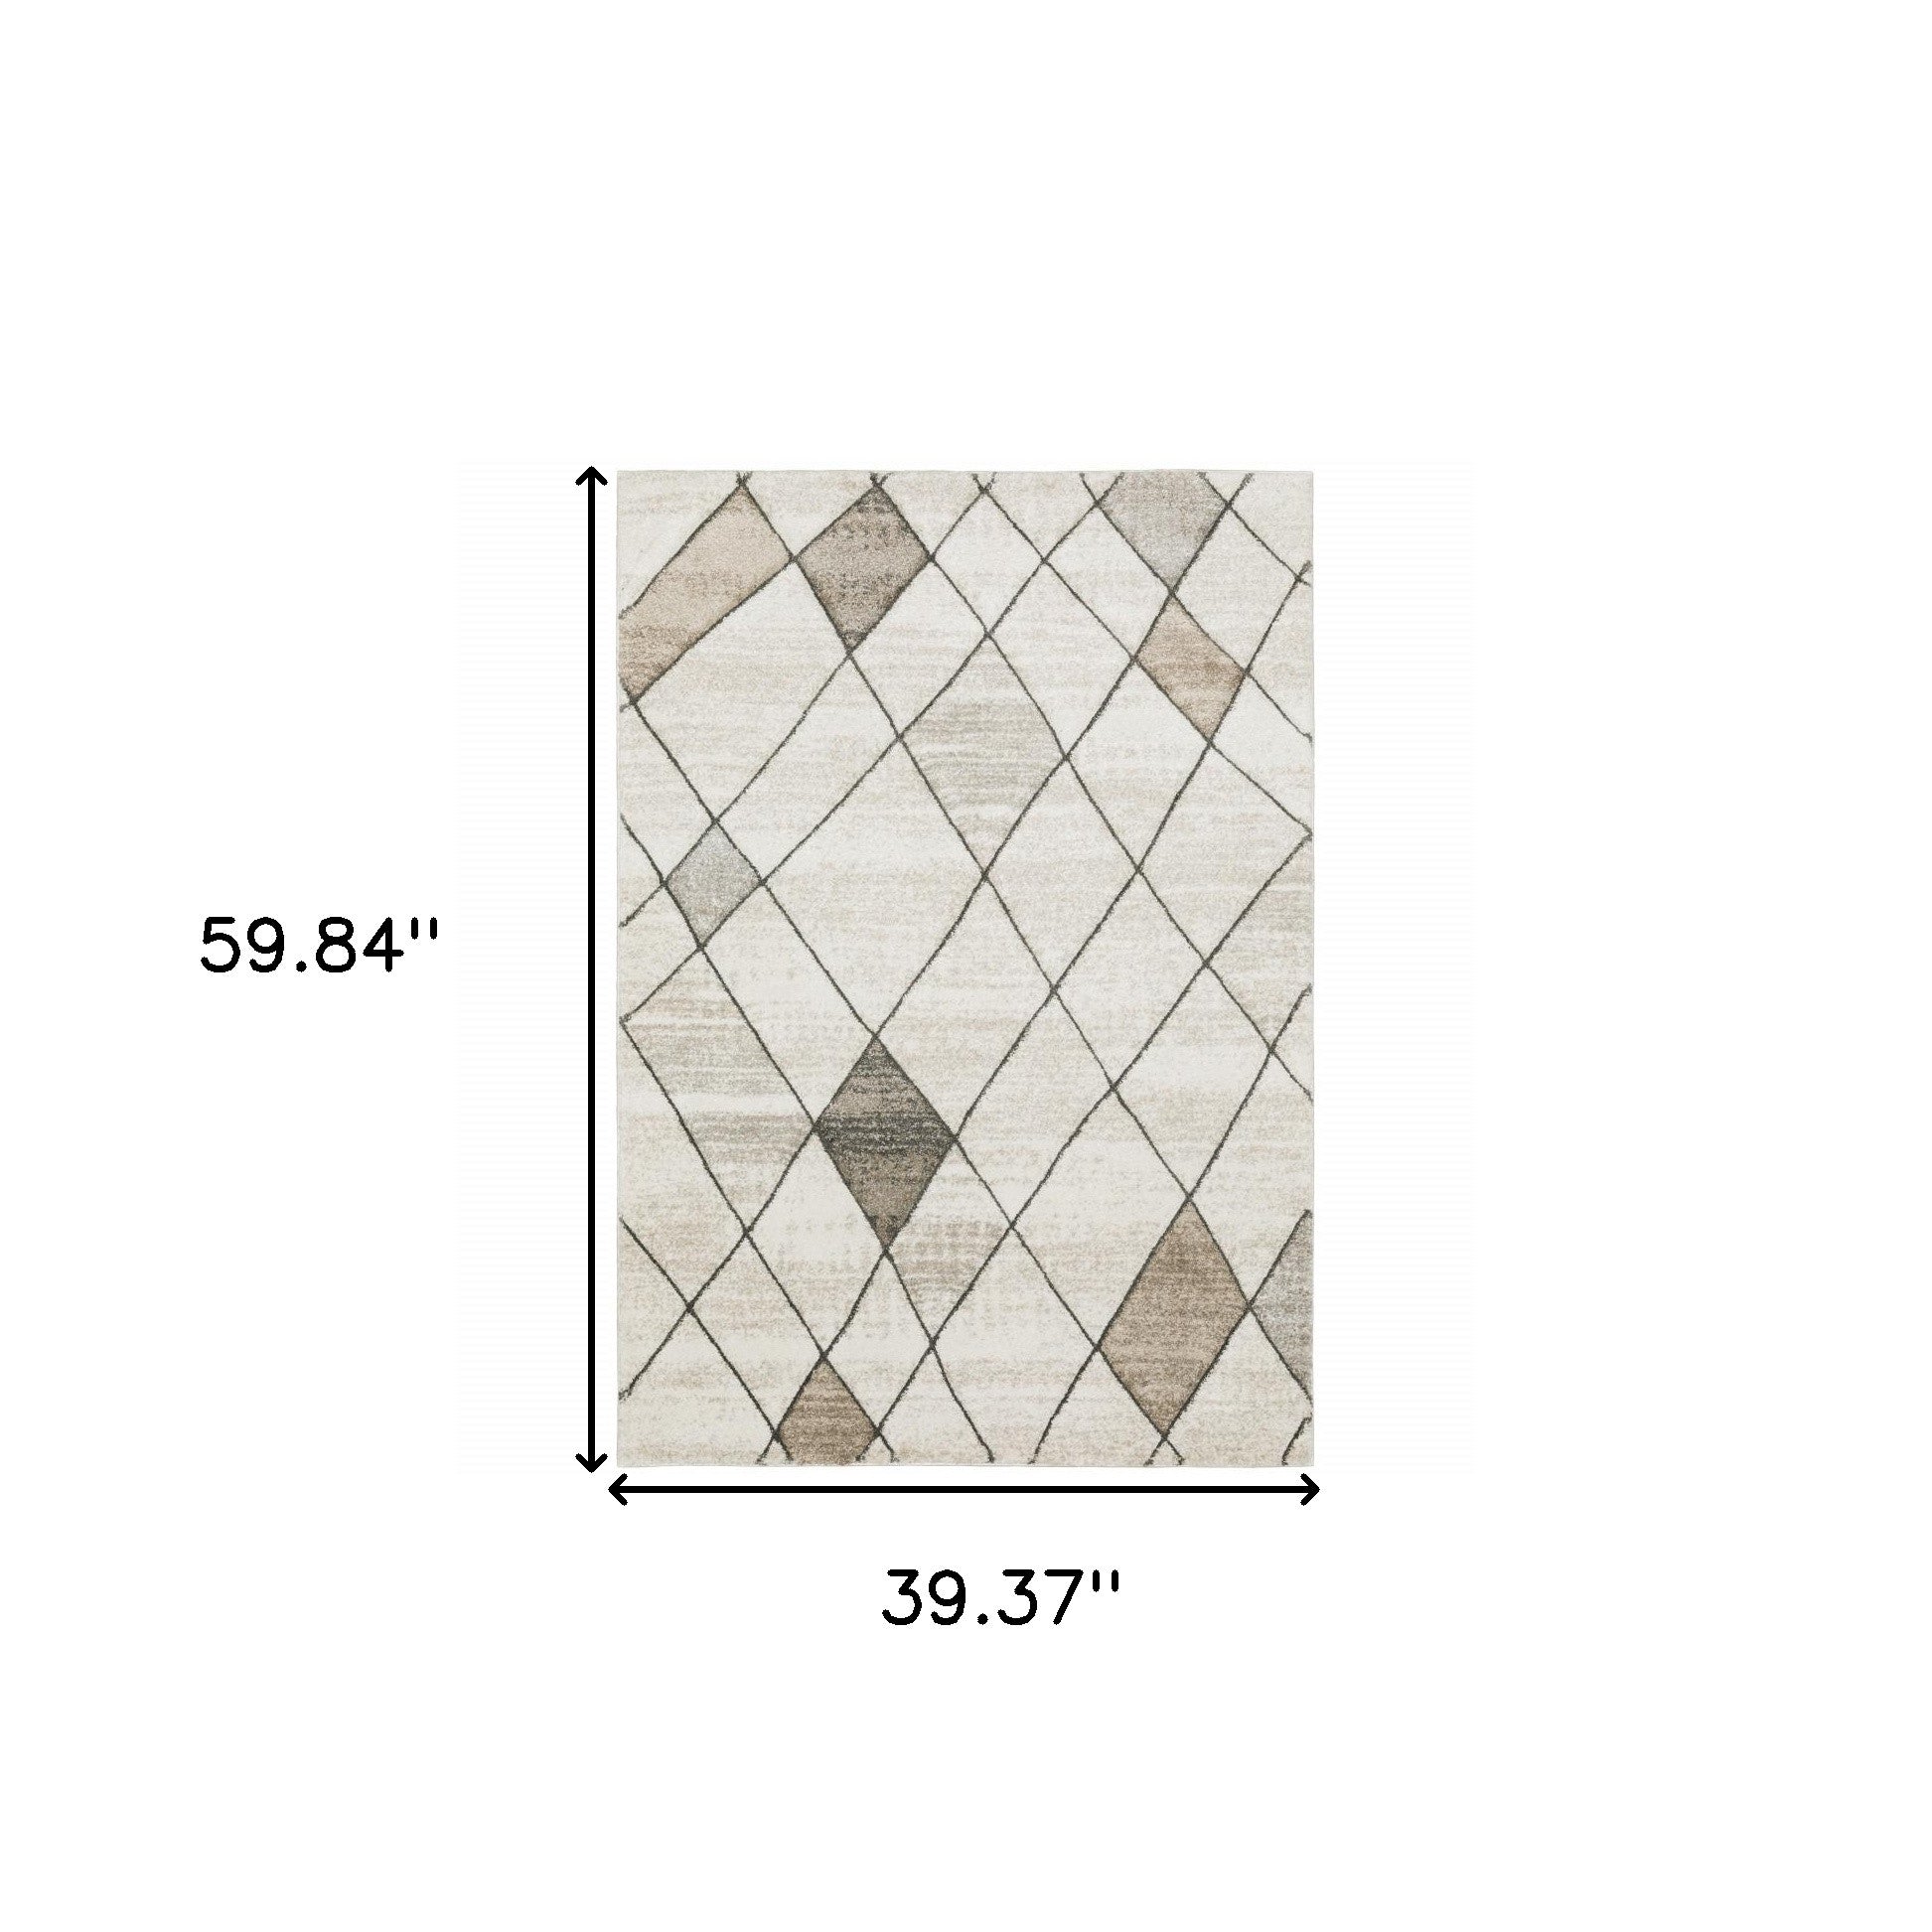 3' X 5' Beige Grey Tan And Brown Geometric Power Loom Stain Resistant Area Rug